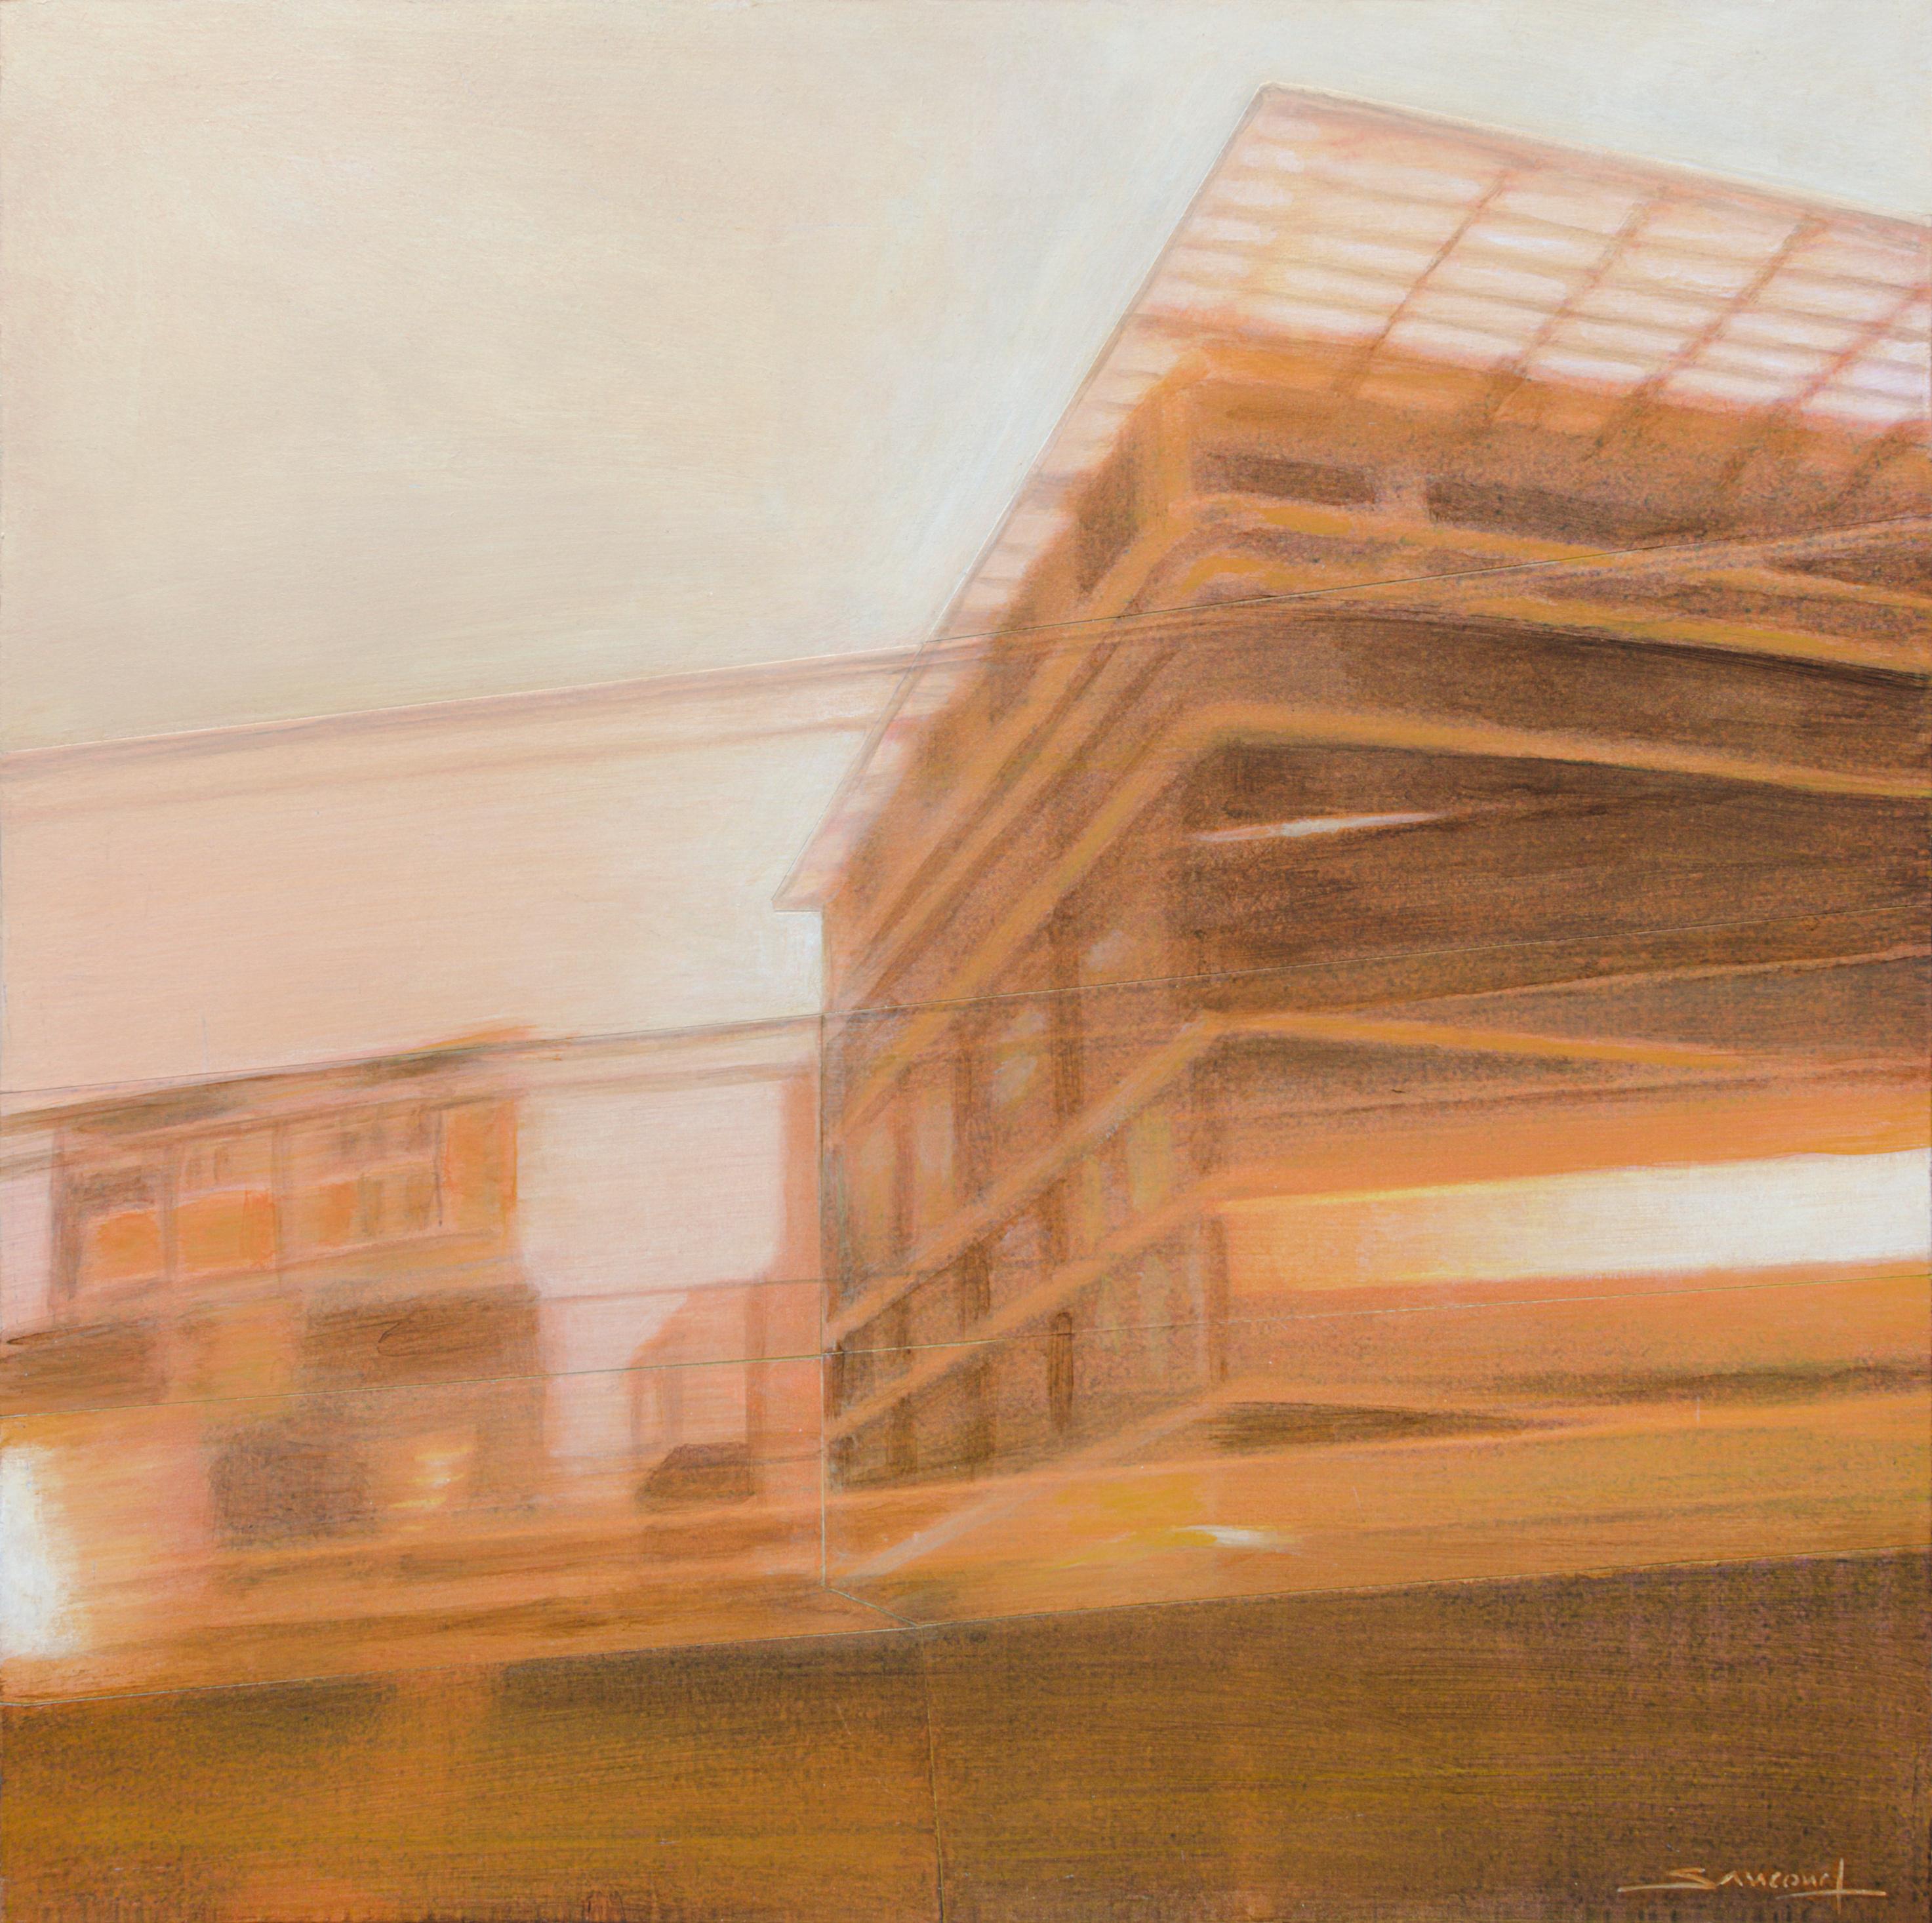 « Night Train #13 (Early Morning) », peinture de paysage urbain en techniques mixtes de Sepia